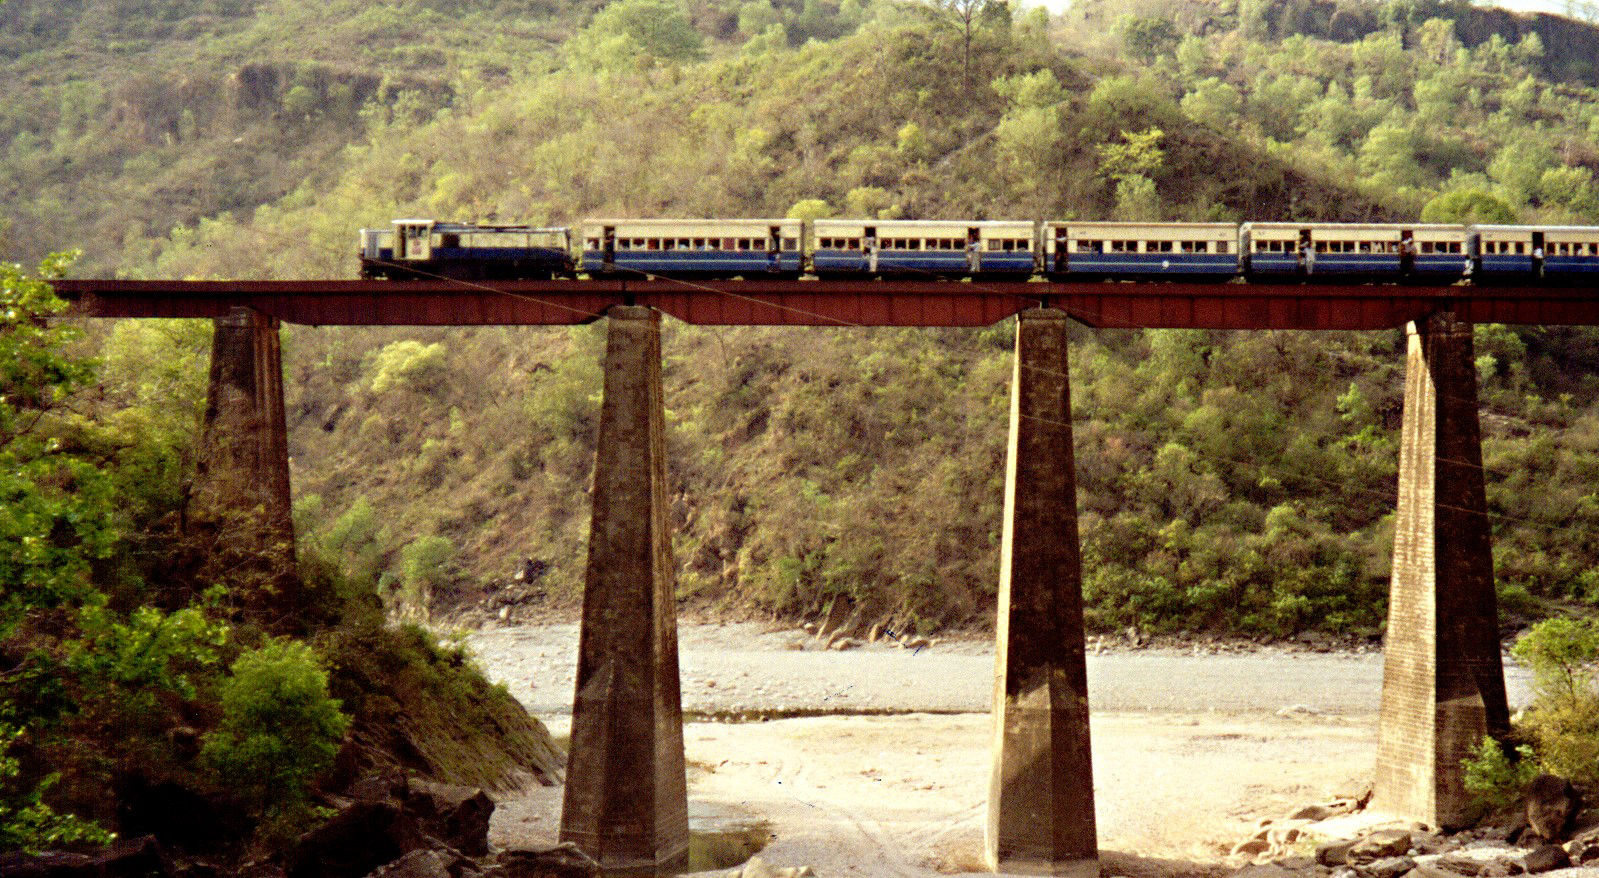 Kangra Valley train